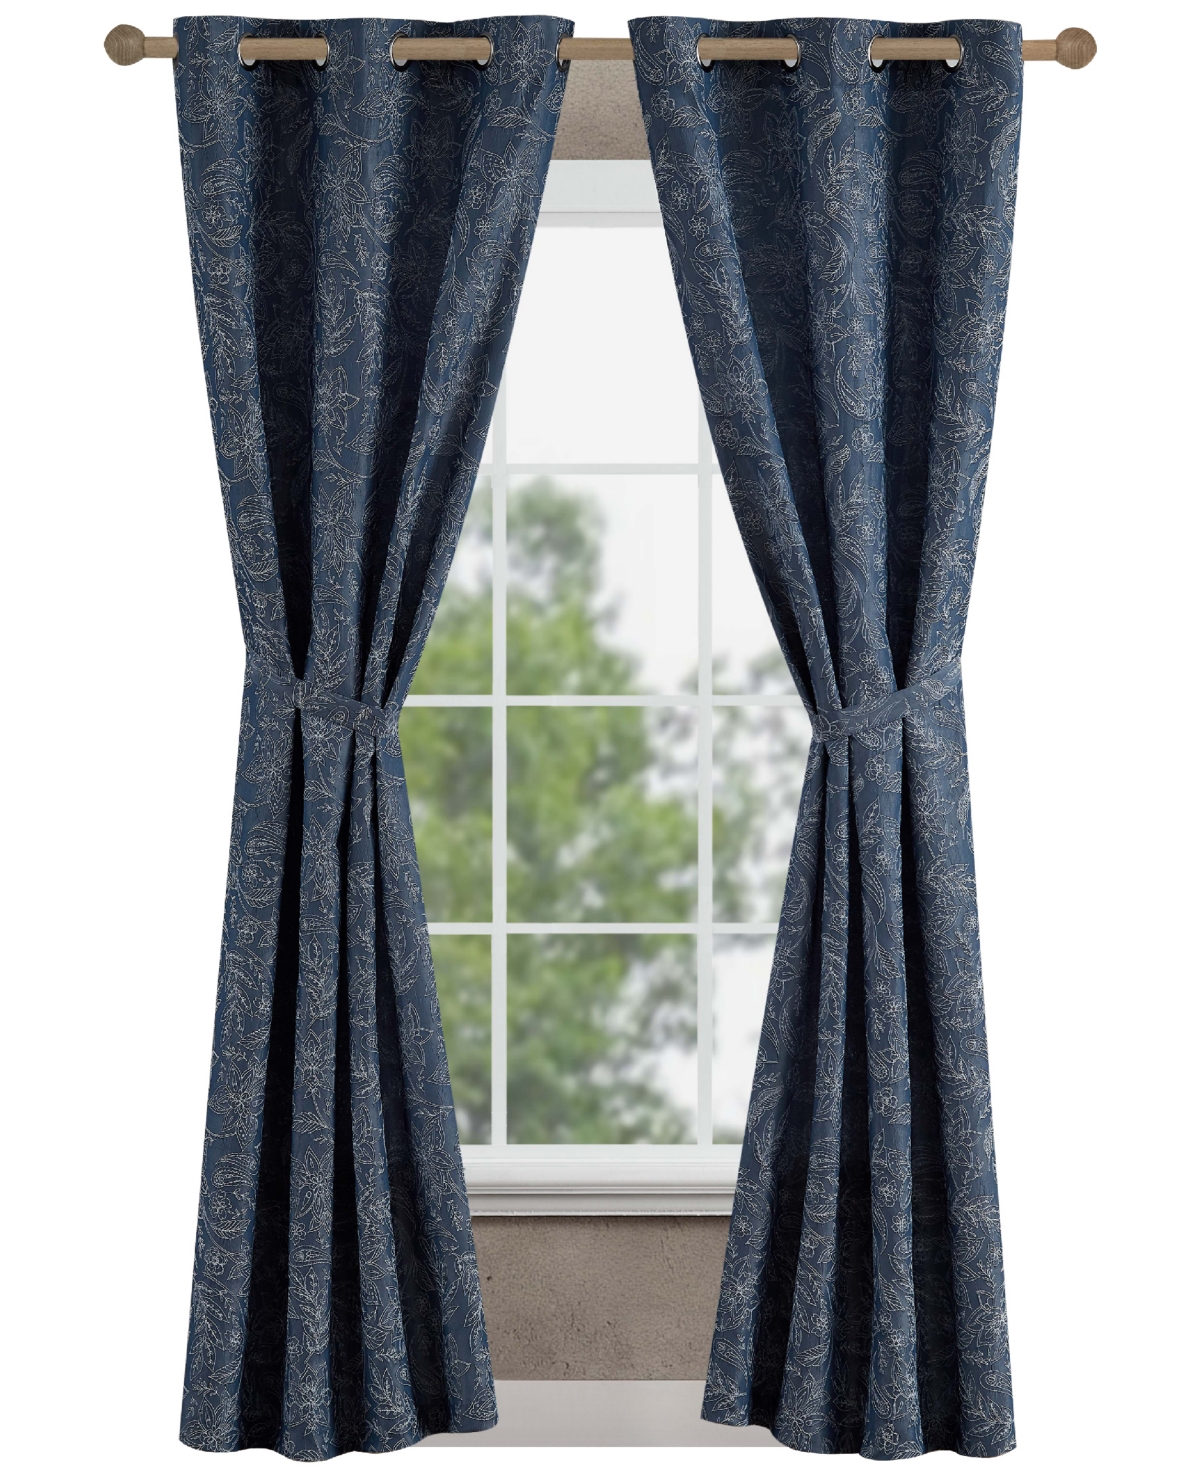 Jessica Simpson Groovy Paisley Textured Blackout Grommet Window Curtain Panel Pair With Tiebacks, 38" X 96" In Navy